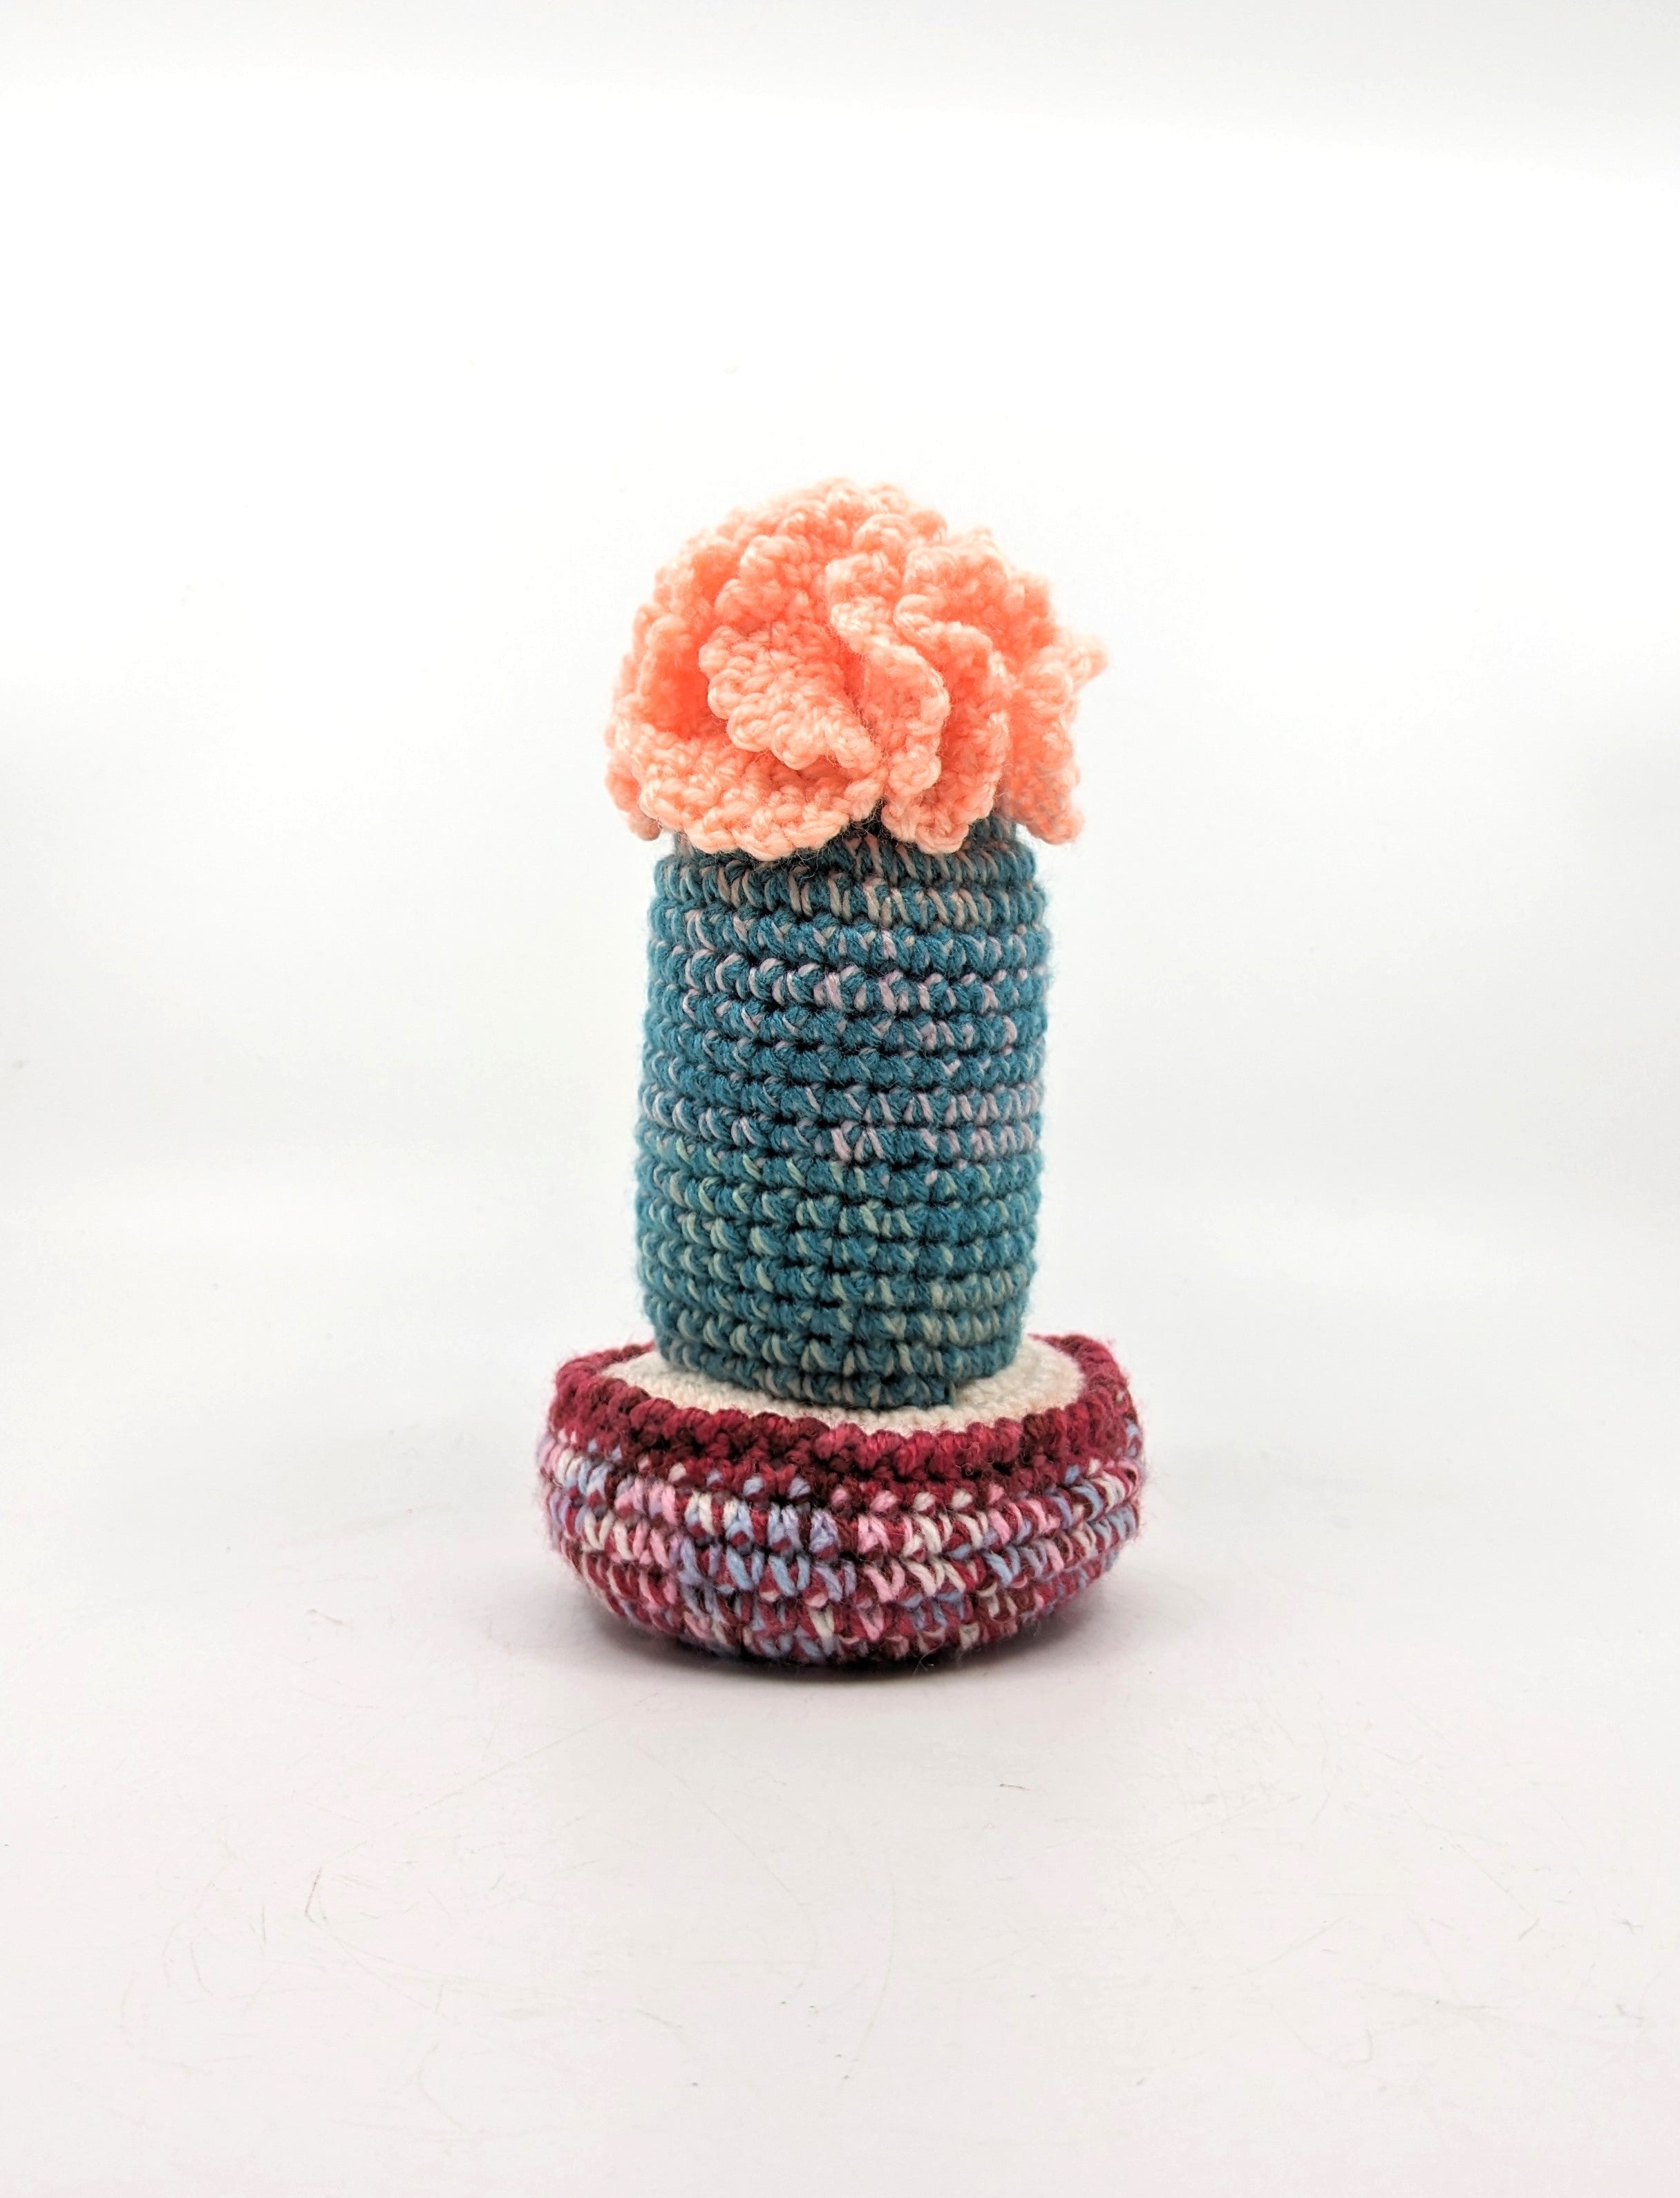 Assorted Cactuses - Millie Radovic Fibre Art artisan Coral 